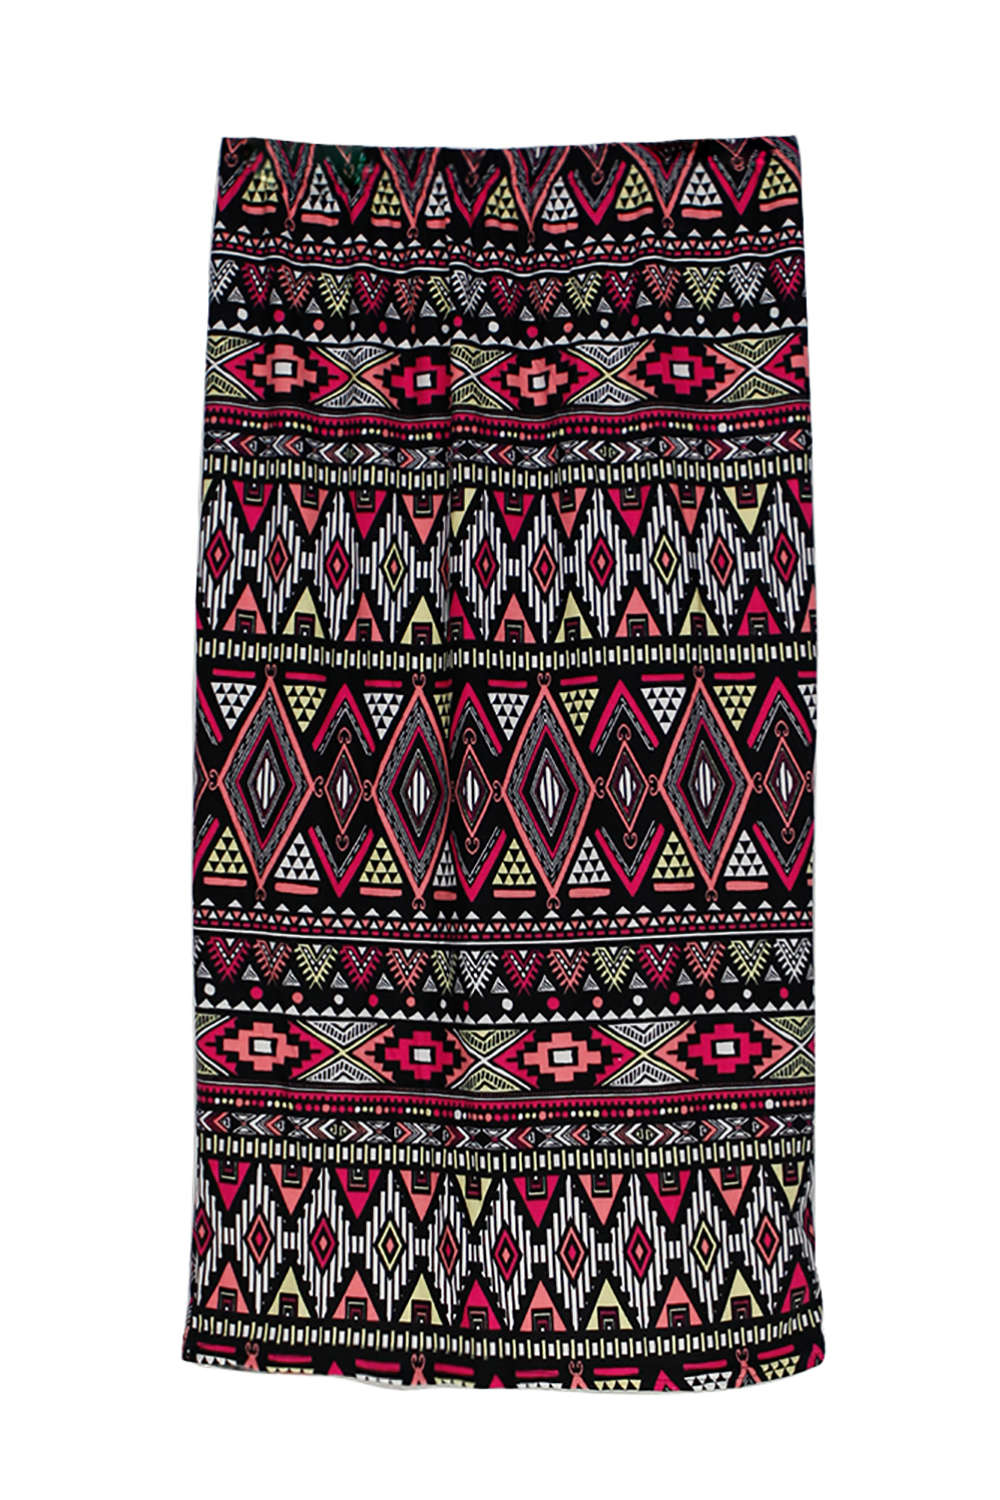 Iyasson Woman Printed Midi-length Skirt High Waist Pencil Bodycon Skirt